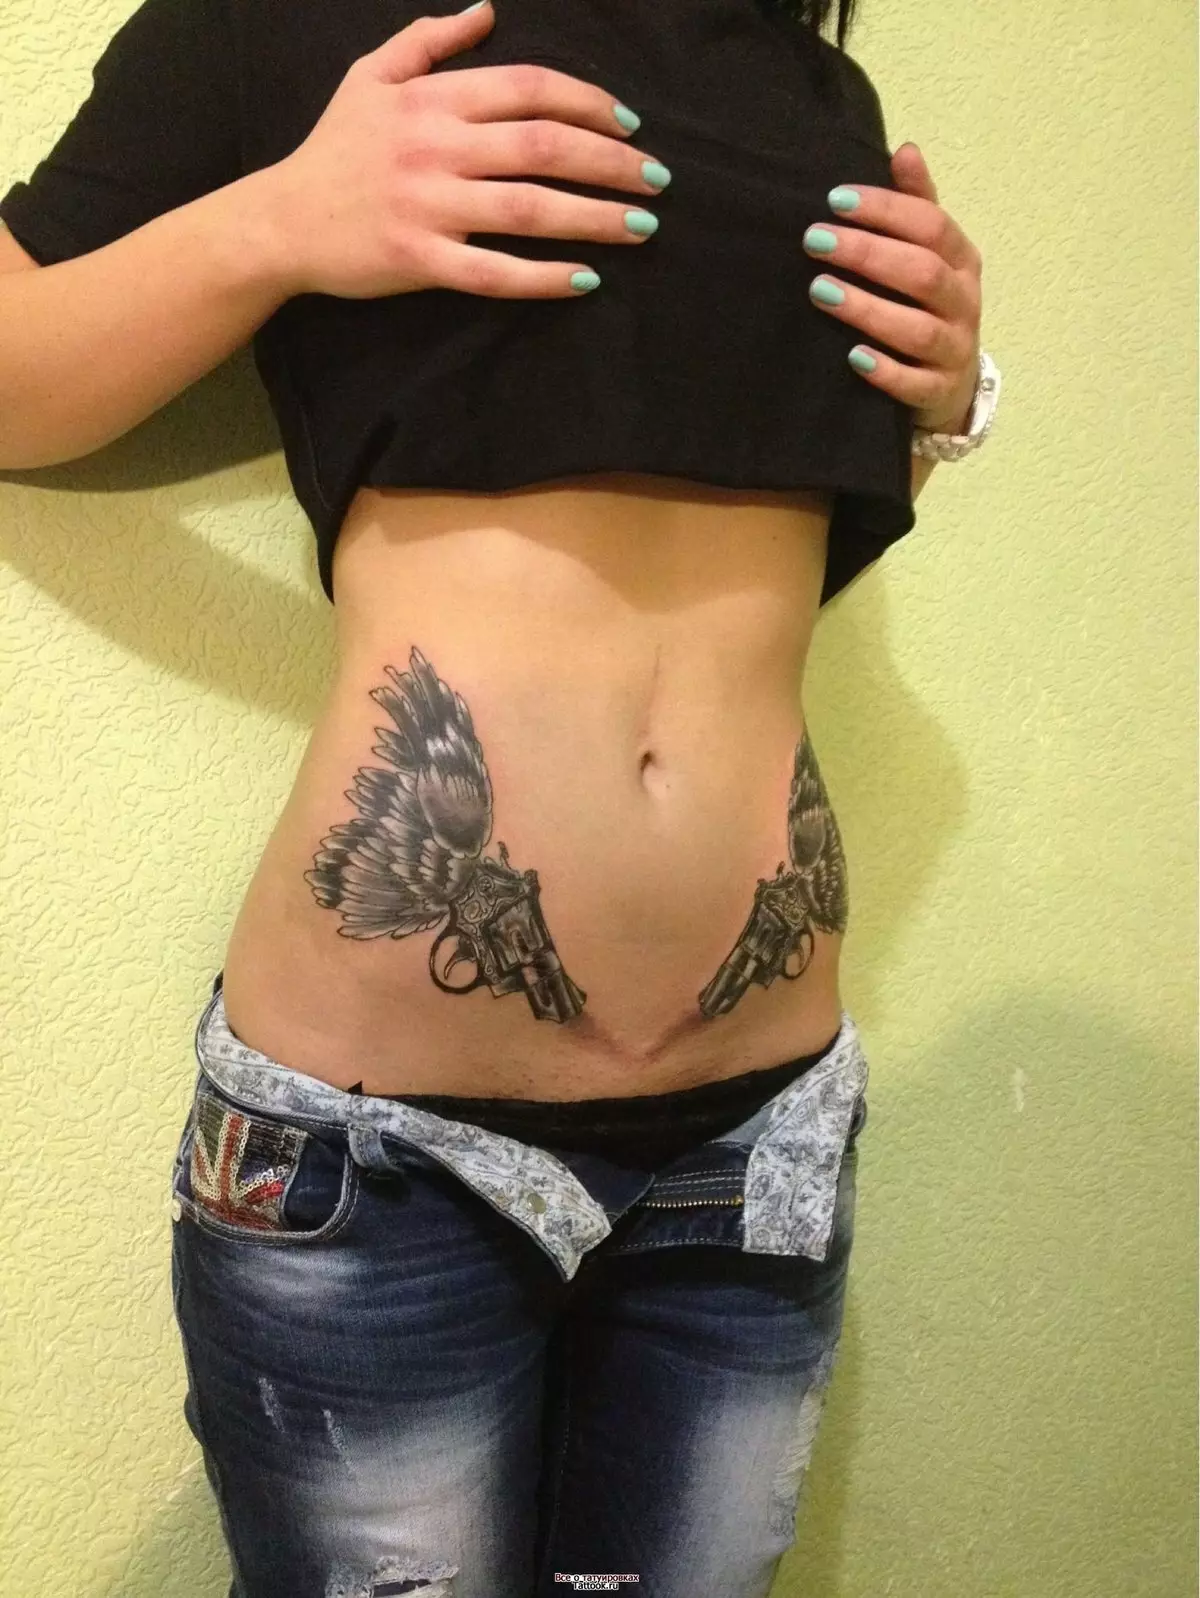 Tattoo ստամոքսի վրա աղջիկների համար (61 լուսանկար). Էսքիզներ: Դաջվածքներ որովայնի ներքեւի մասում եւ navel- ի շուրջը ծննդաբերությունից հետո, փոքր գեղեցիկ դաջվածք եւ մեծ 13772_59